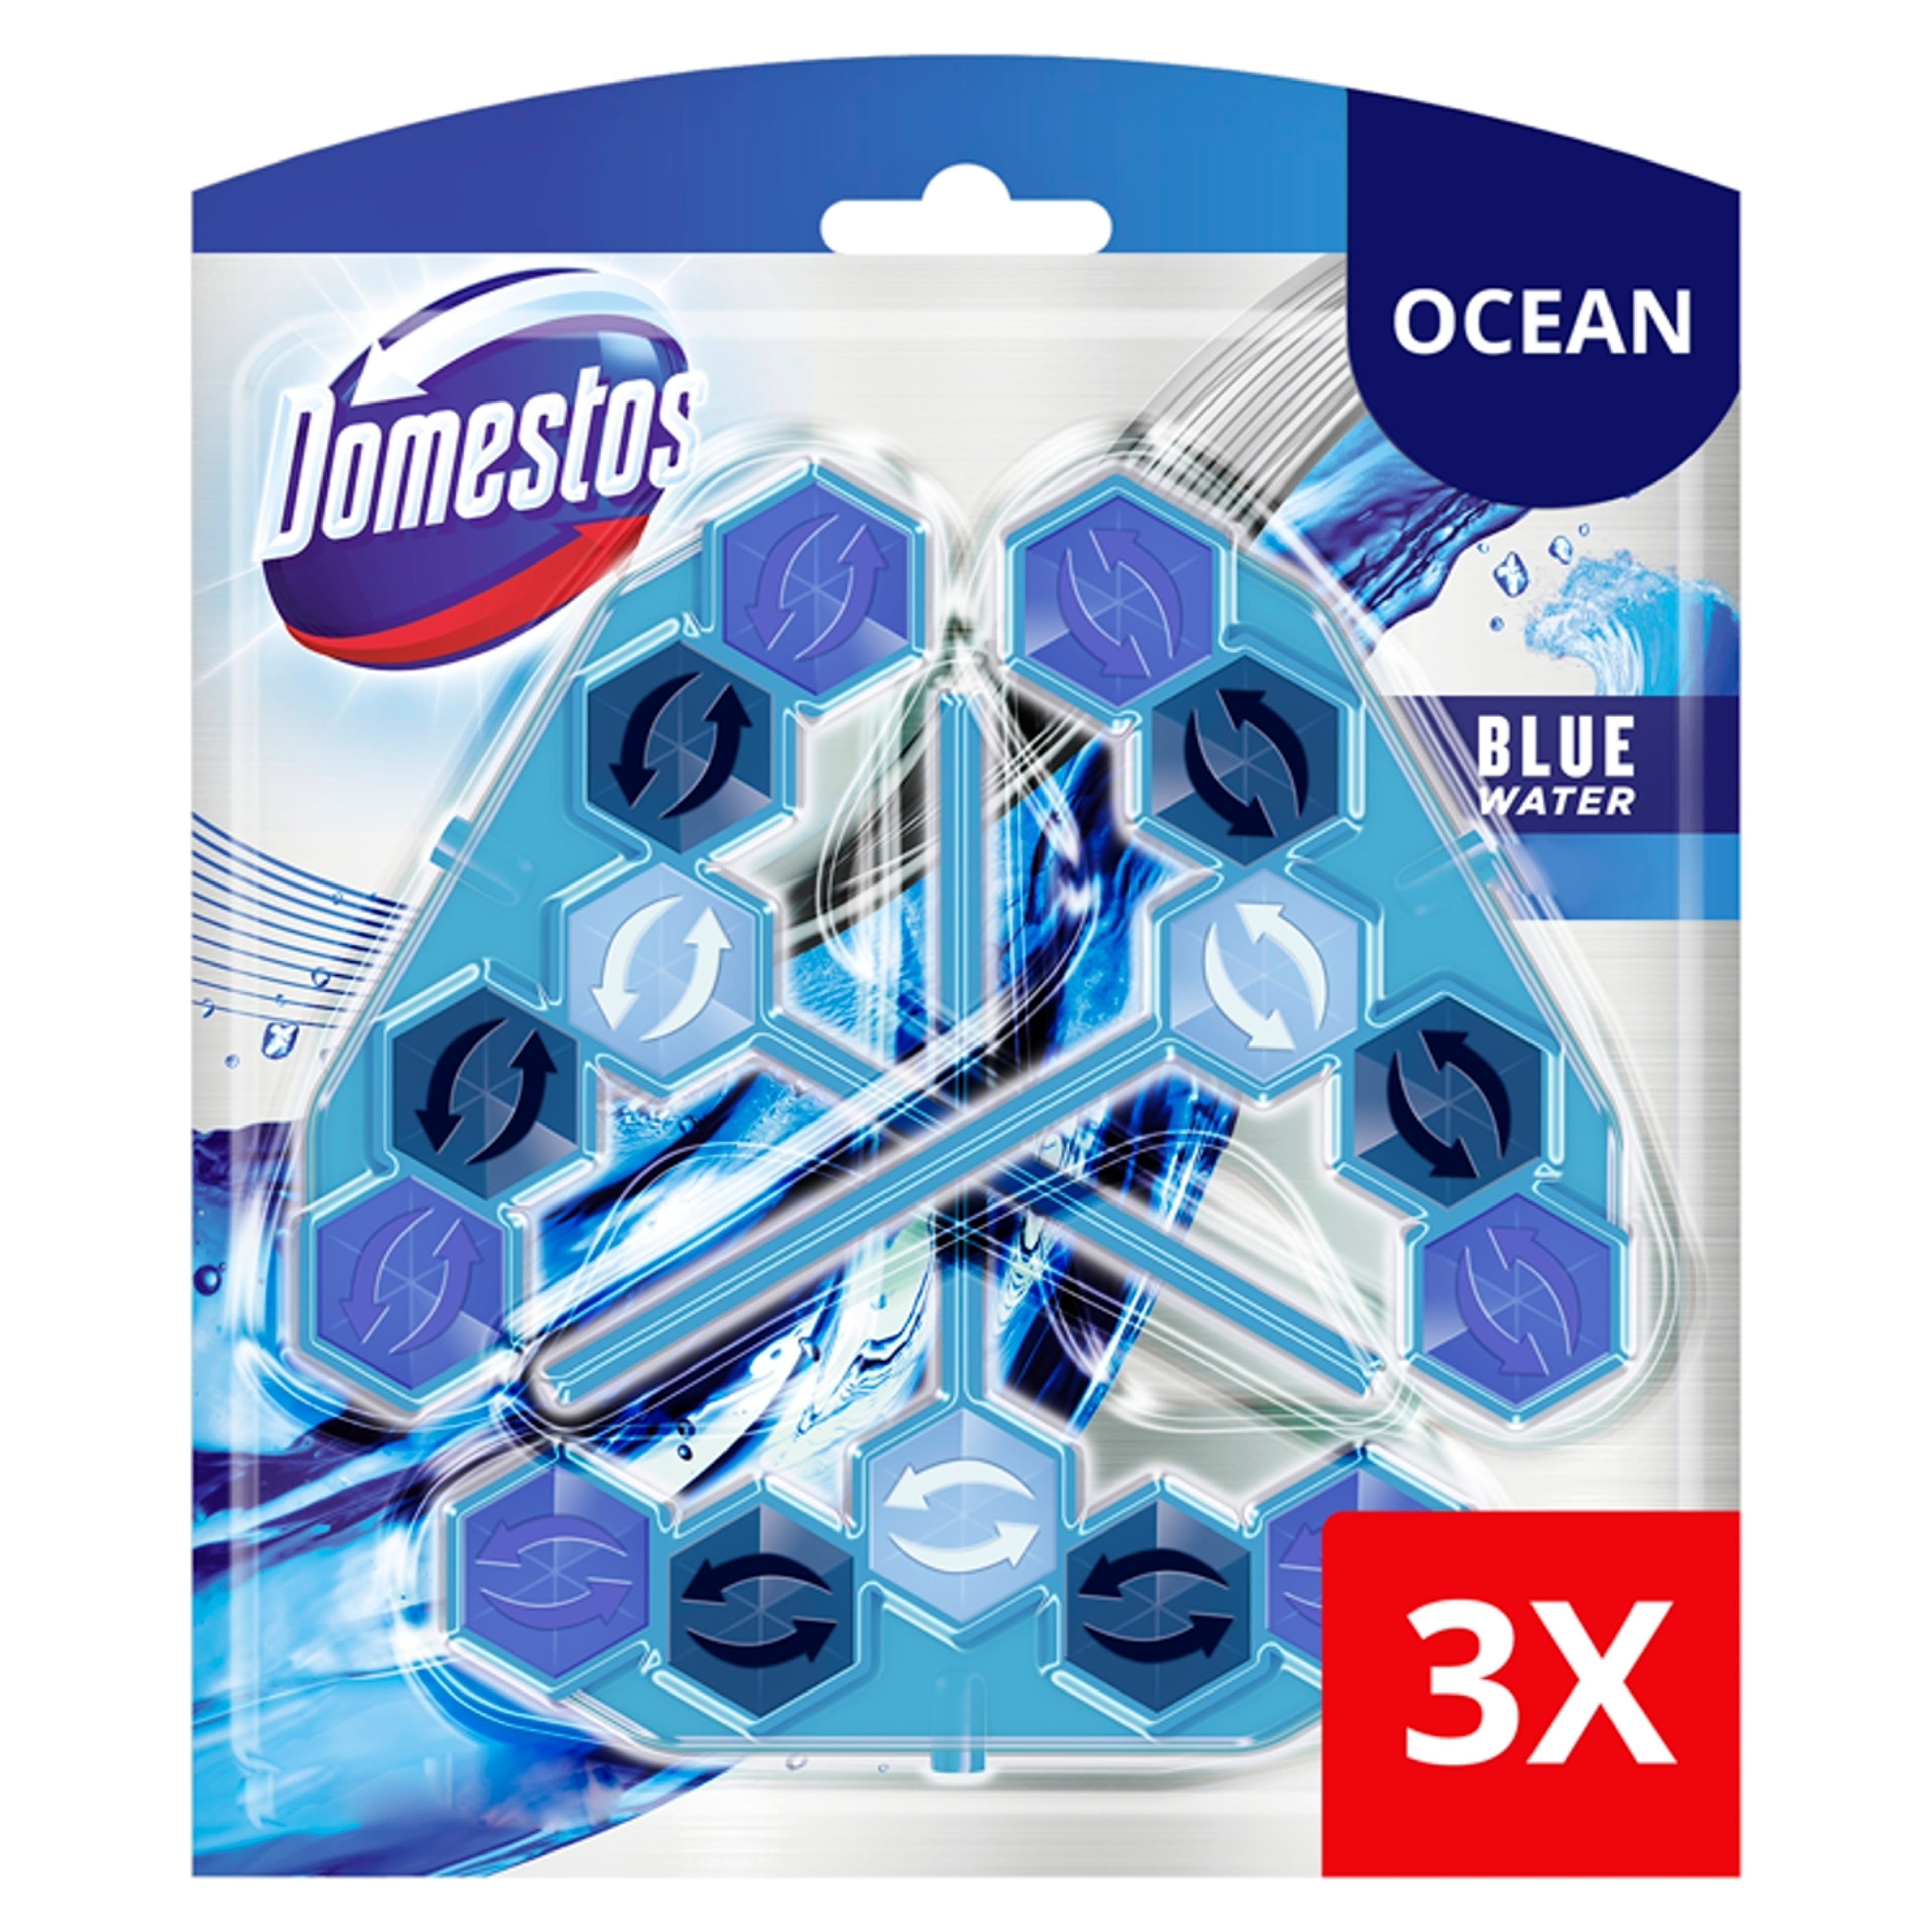 Domestos Power 5 aCTIVE Blue Water Ocean WC-Frissítő (3x53 g) - 159 g-2